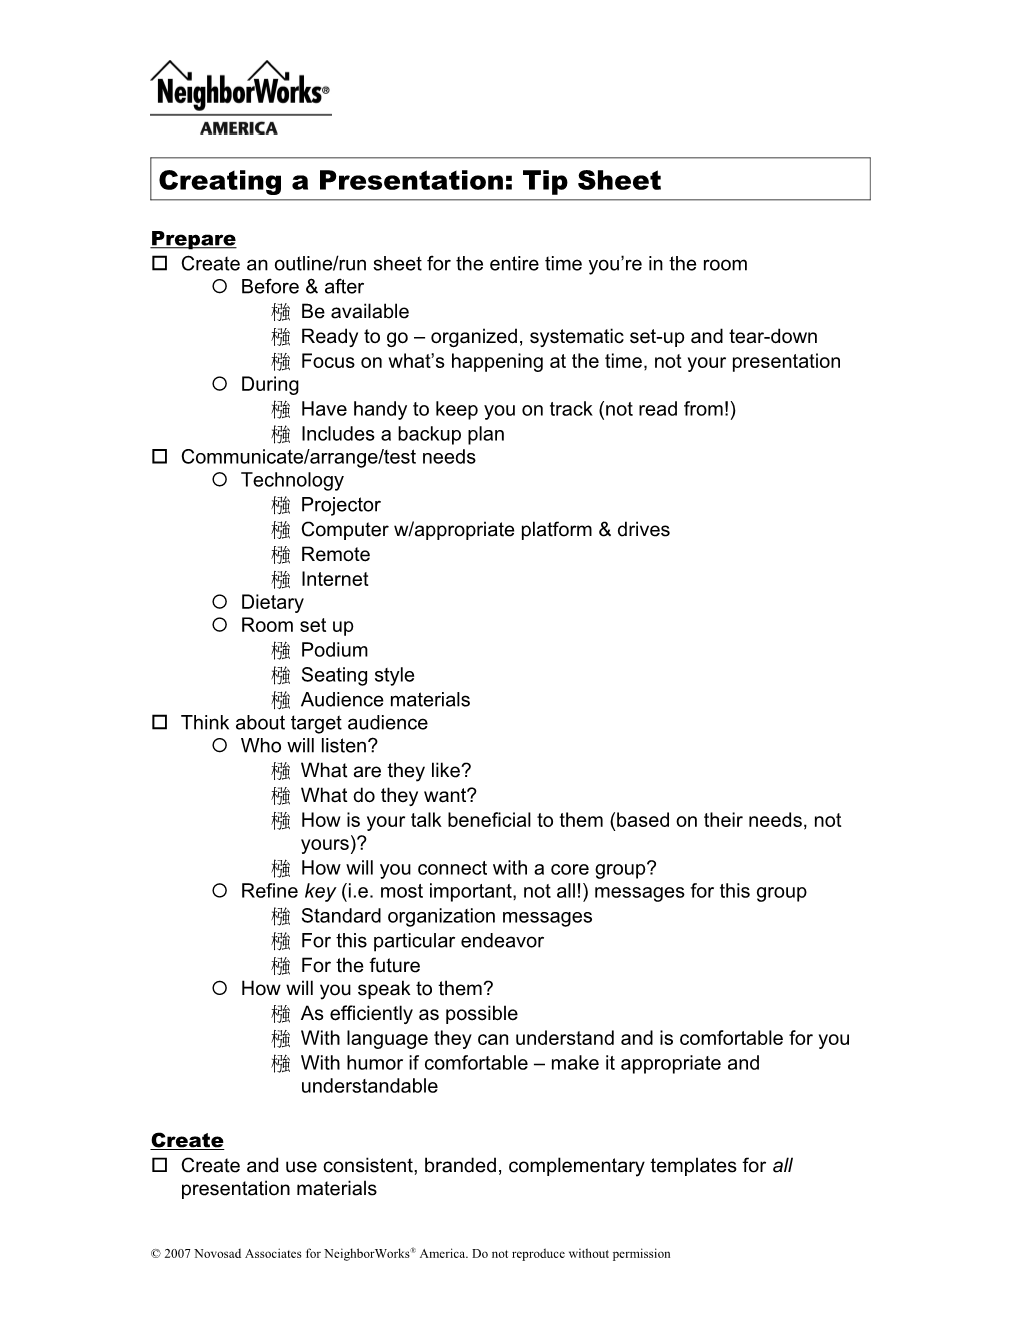 Creating a Proposal: Tip Sheet